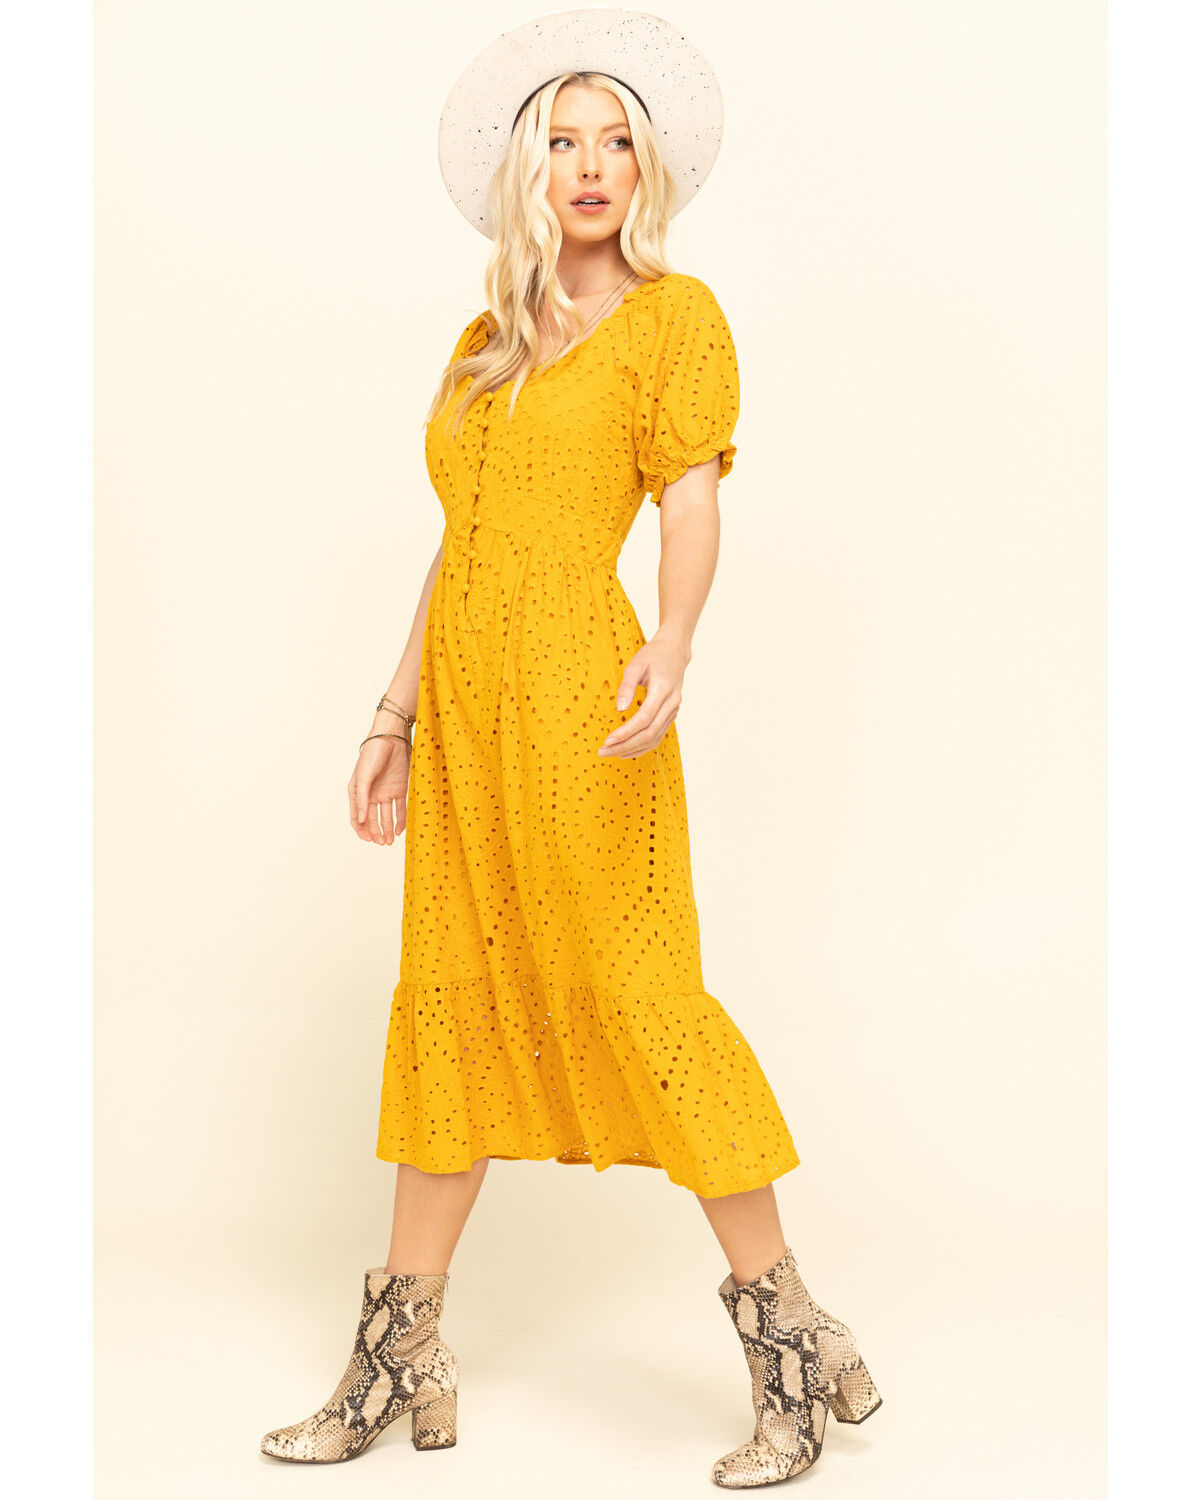 womens mustard dress